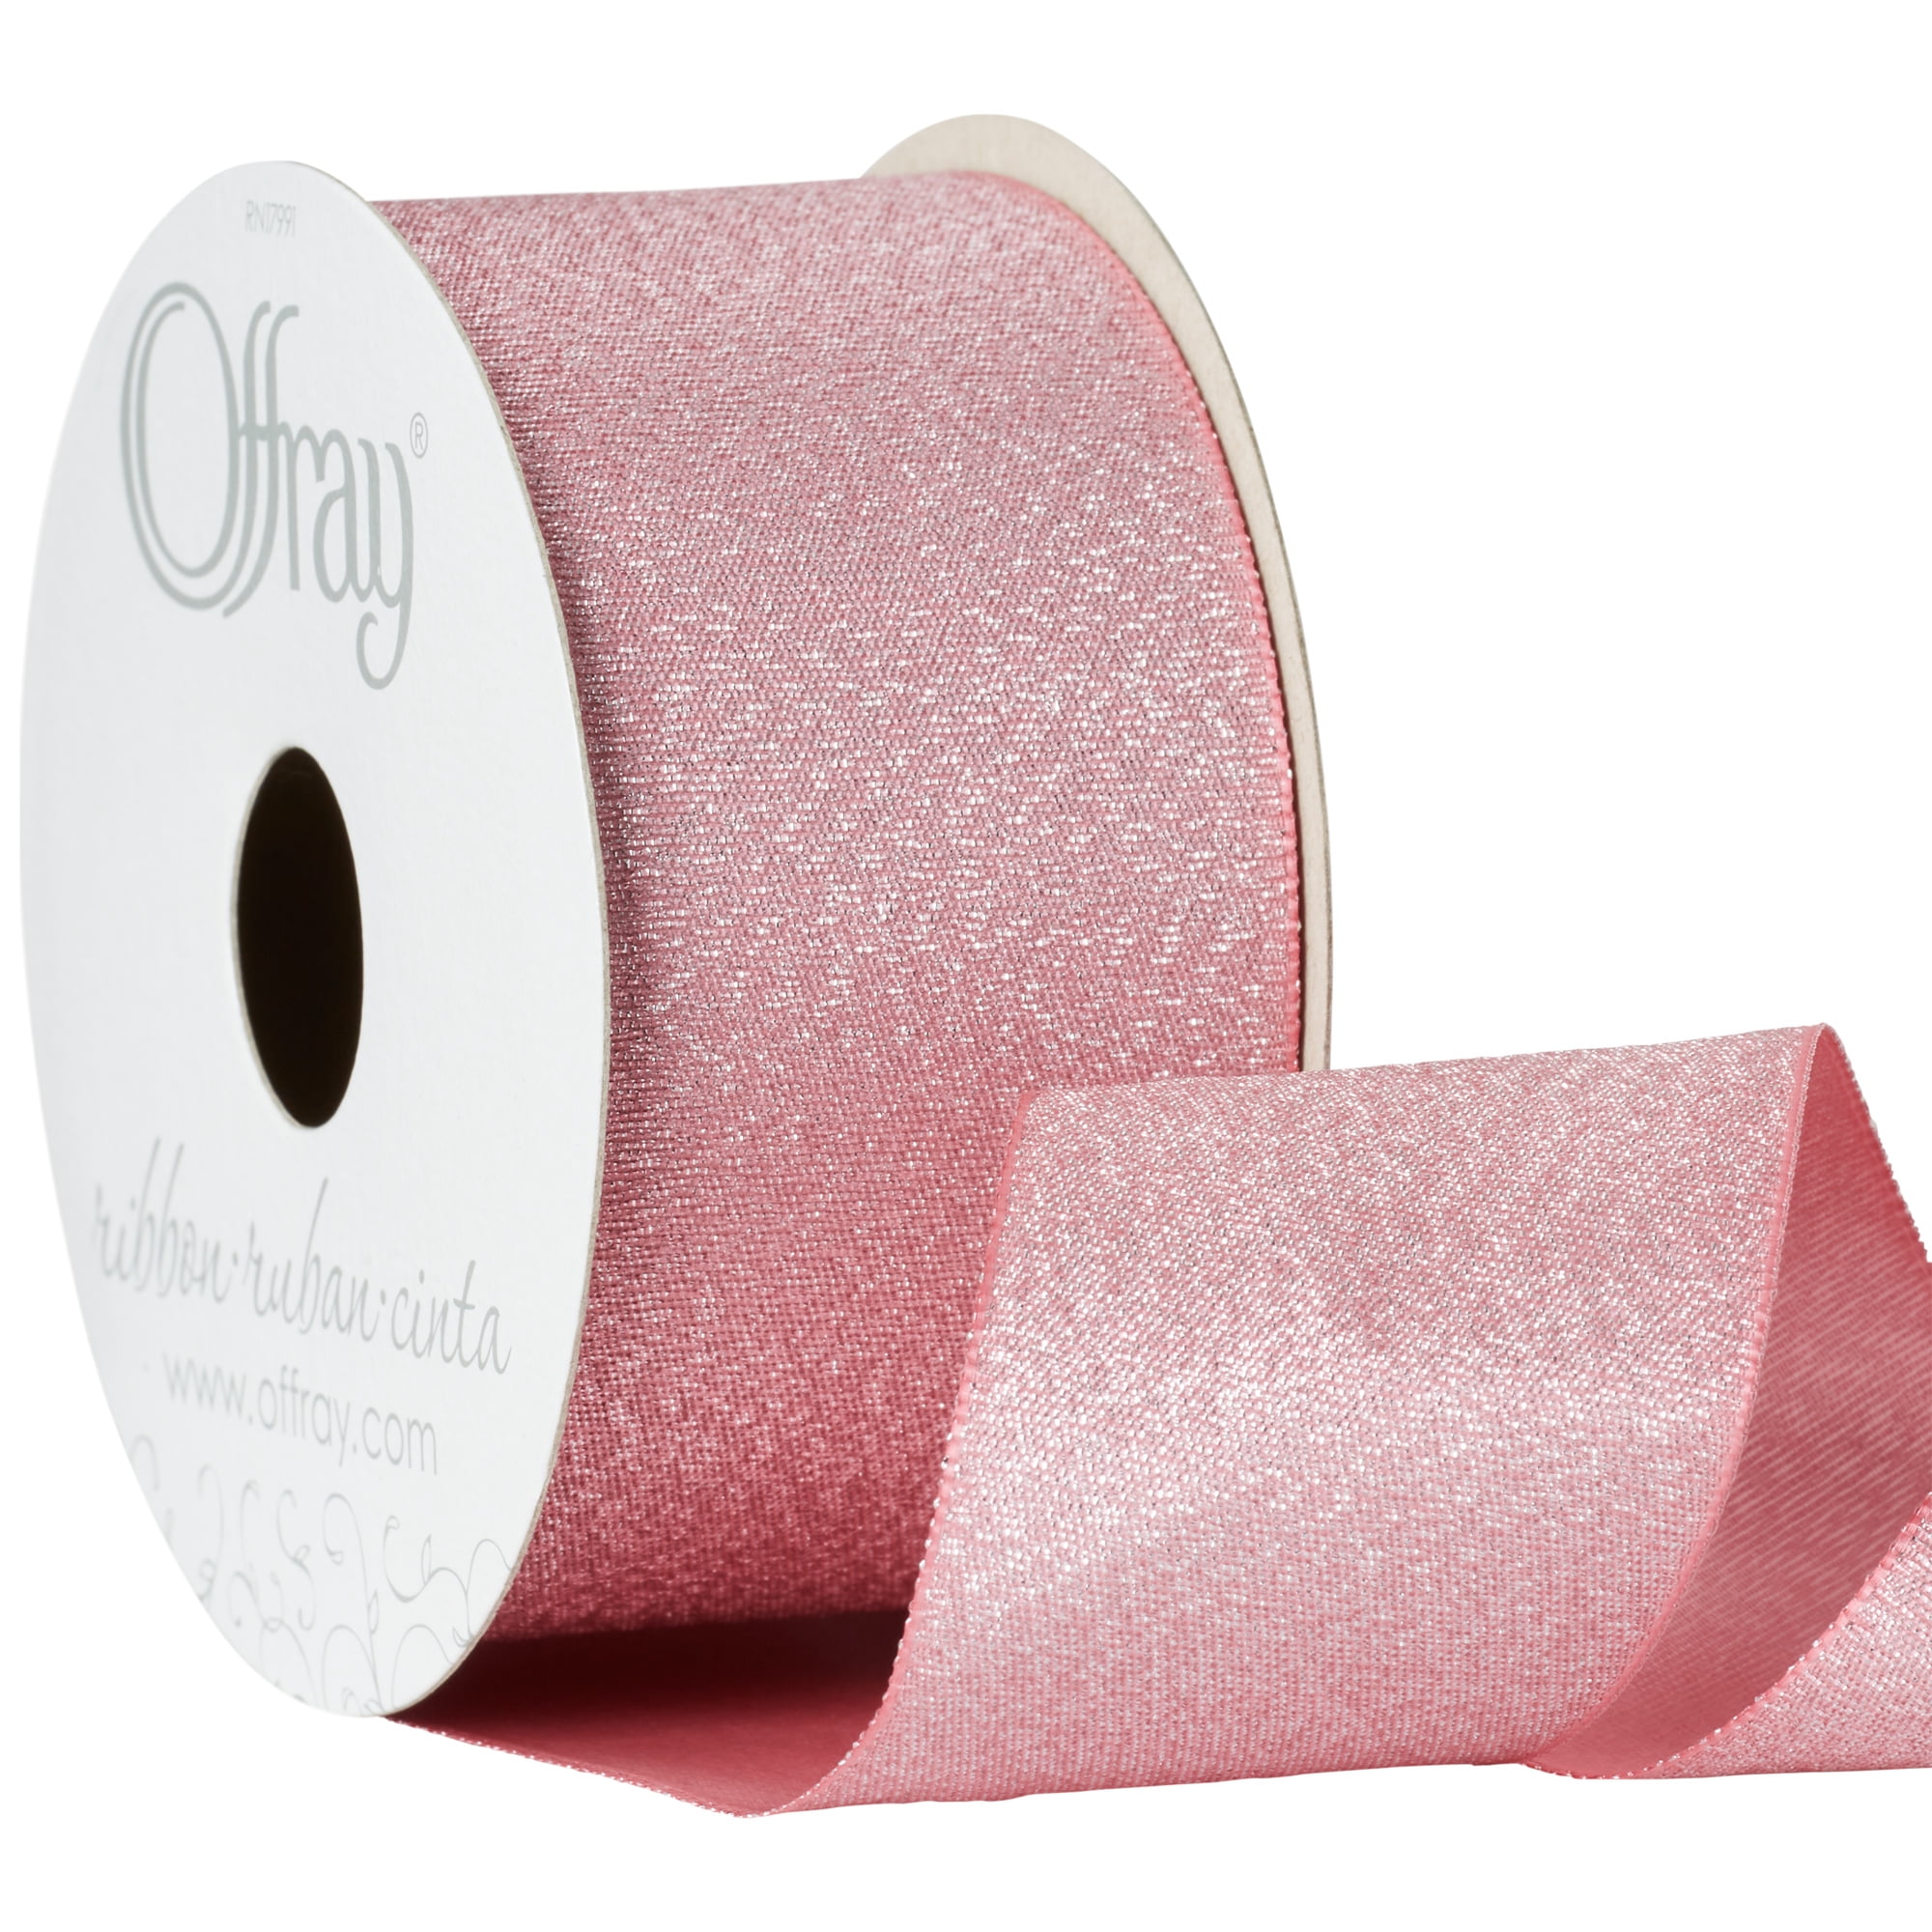 Offray Ribbon, Carnation Pink 5/8 inch Grosgrain Polyester Ribbon, 9 feet